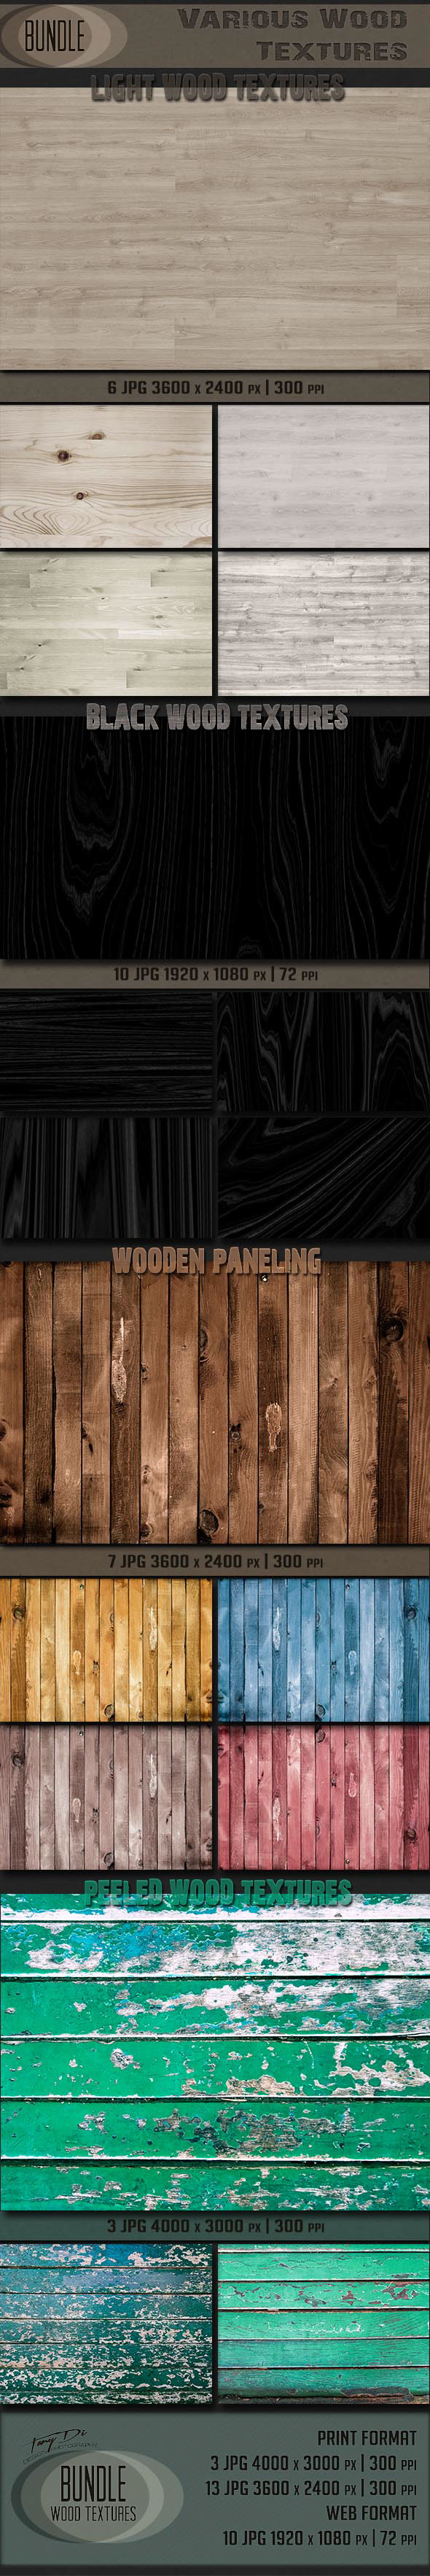 wood textures peeled wood wooden paneling light wood Black Wood